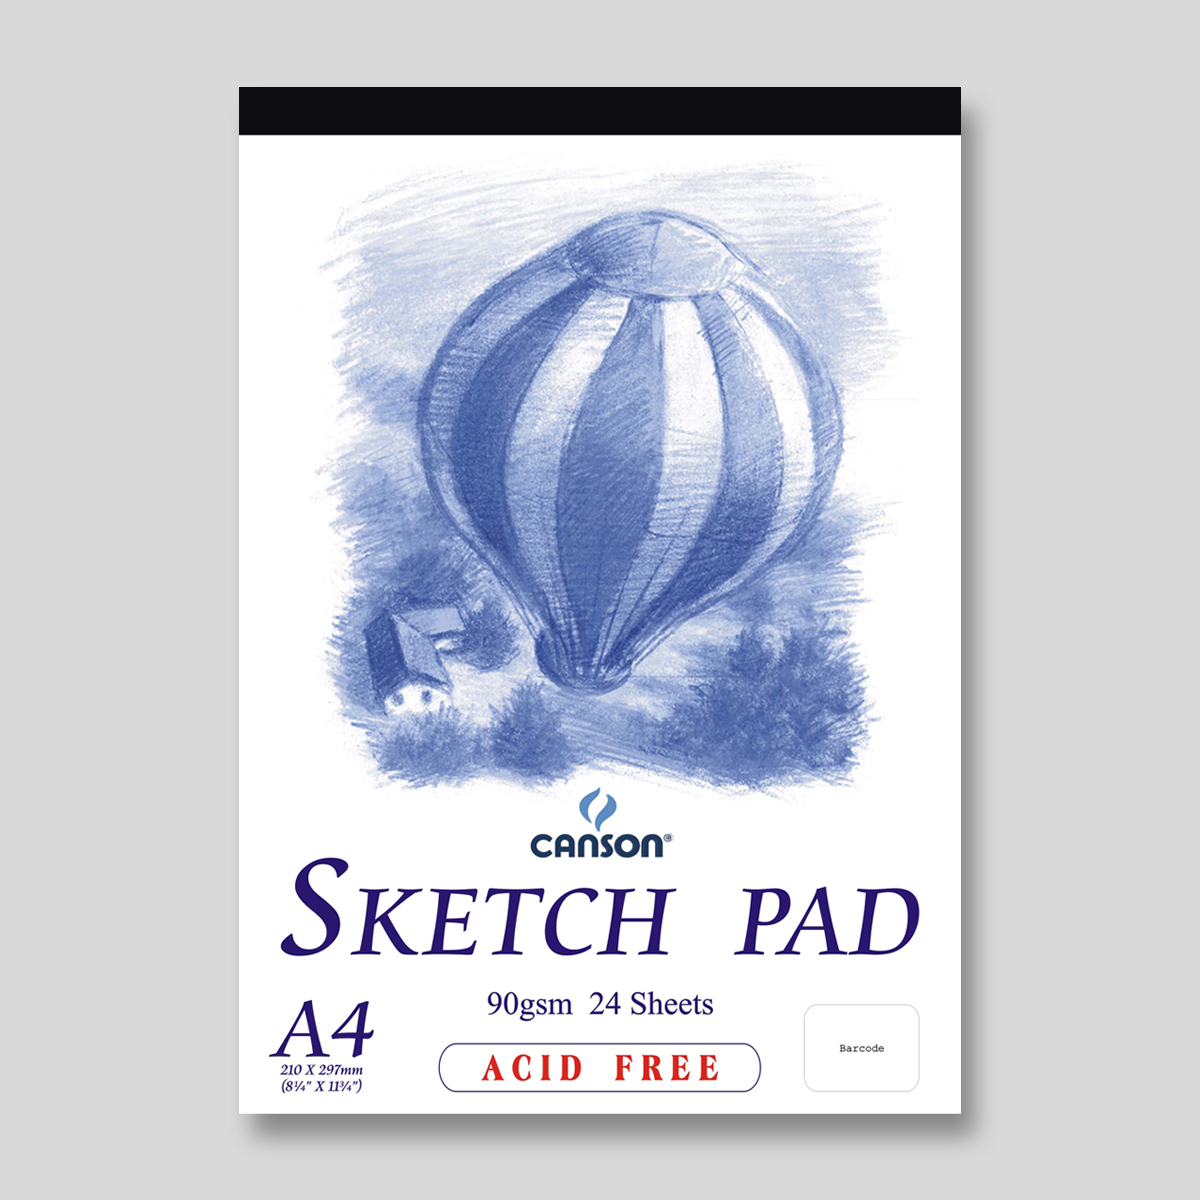 Sketch pad